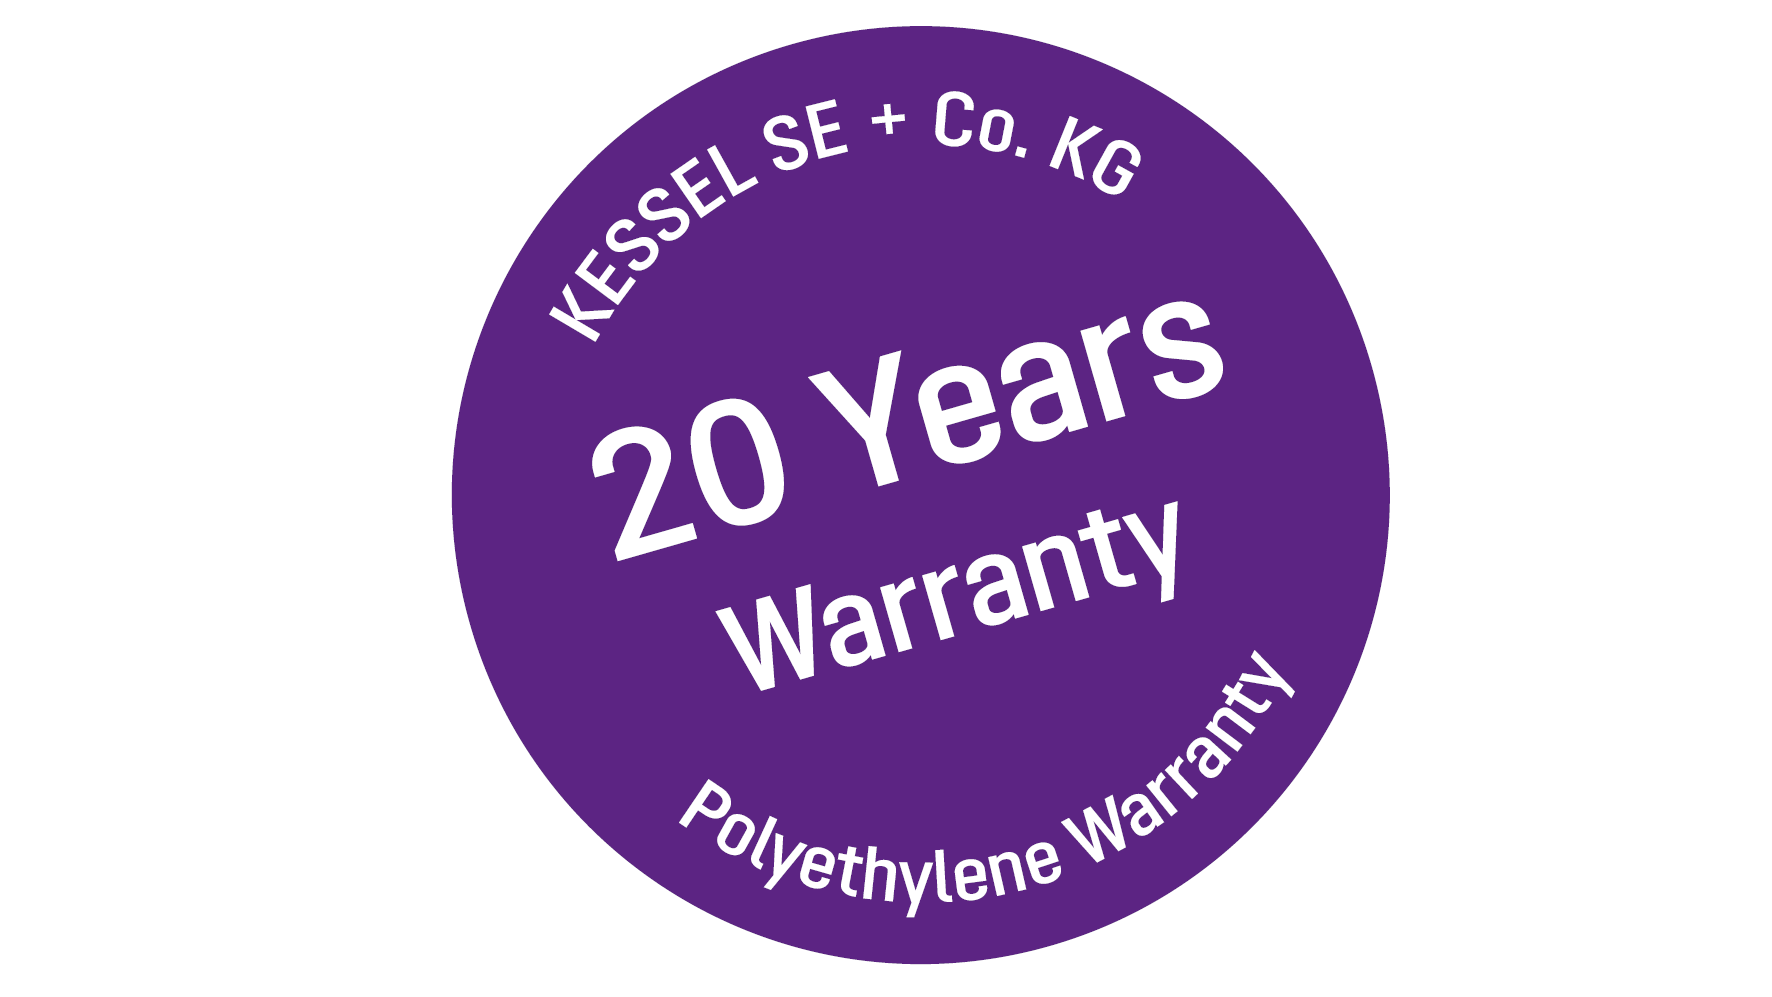 Warranty for KESSEL polyethylene tanks